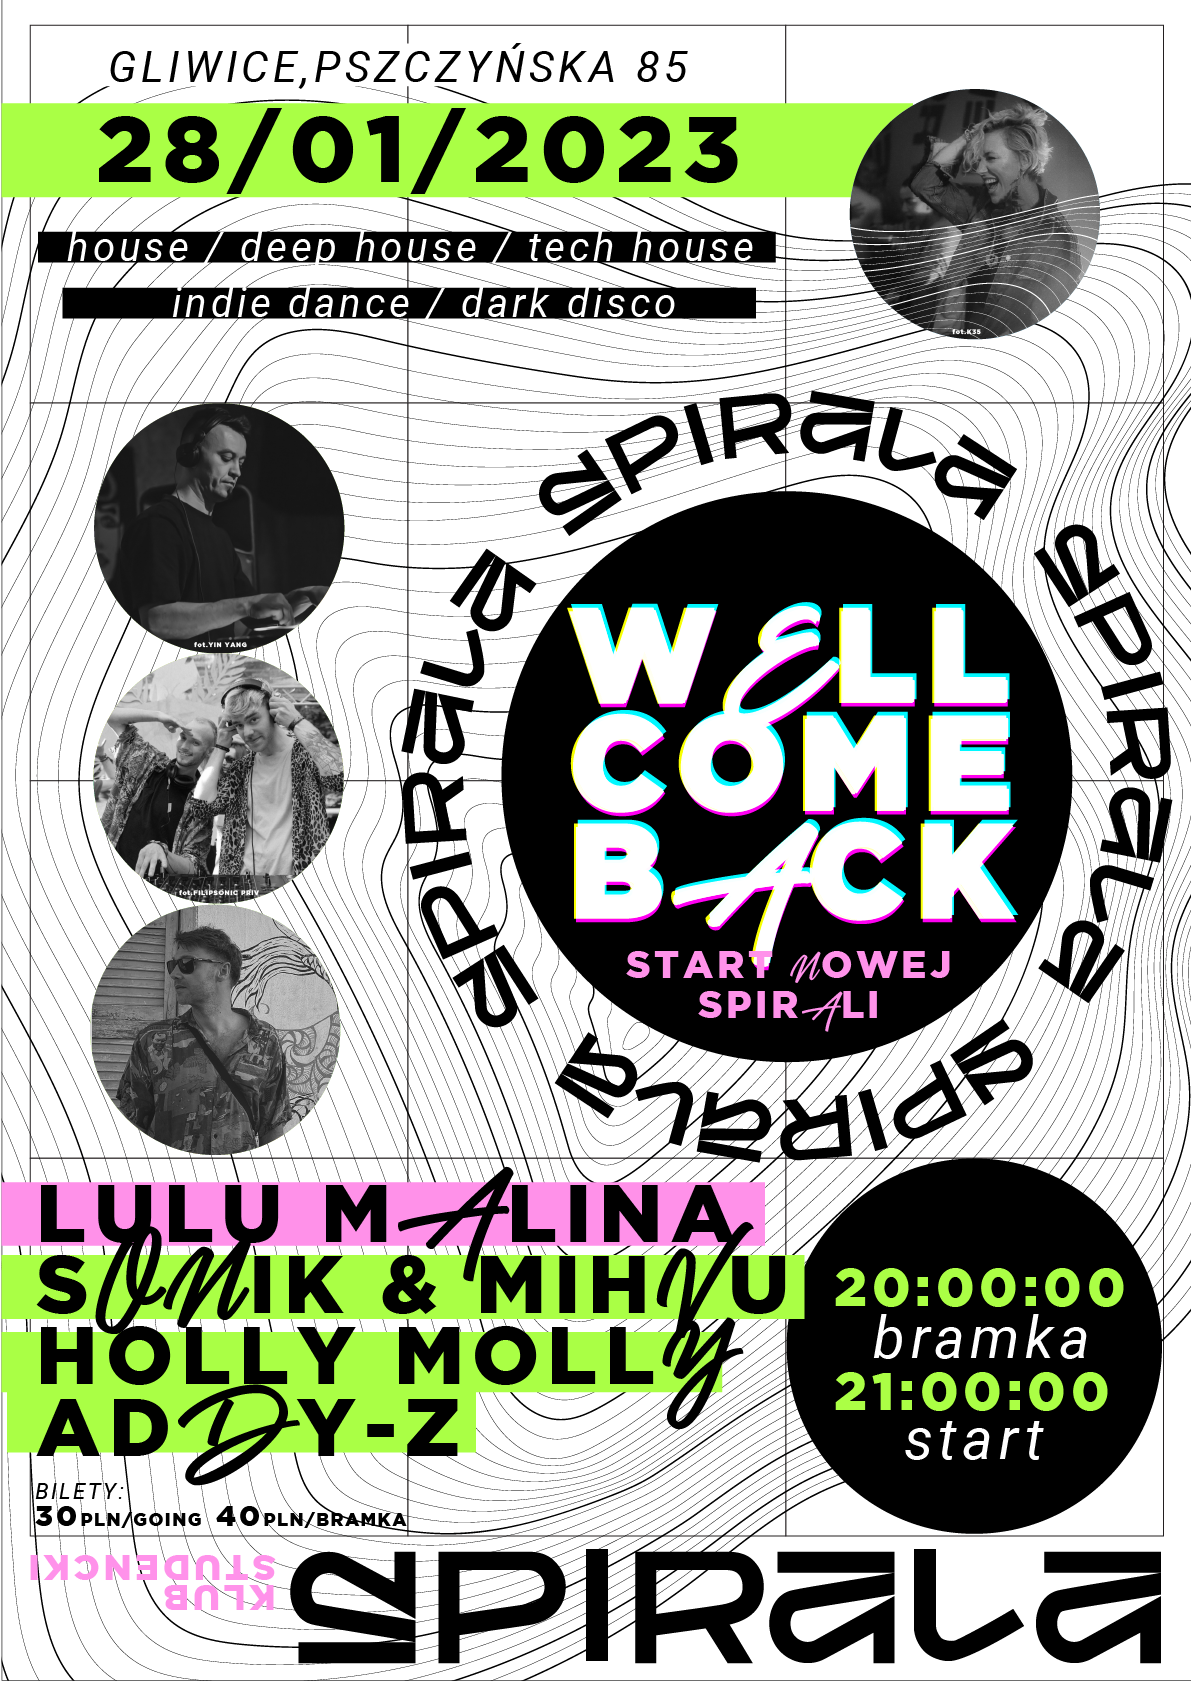 WELL-COME BACK – Start Nowej Spirali – LULU MALINA / SONIK & MIHVU / HOLLY MOLLY / ADDY-Z [Klub Studencki Spirala]